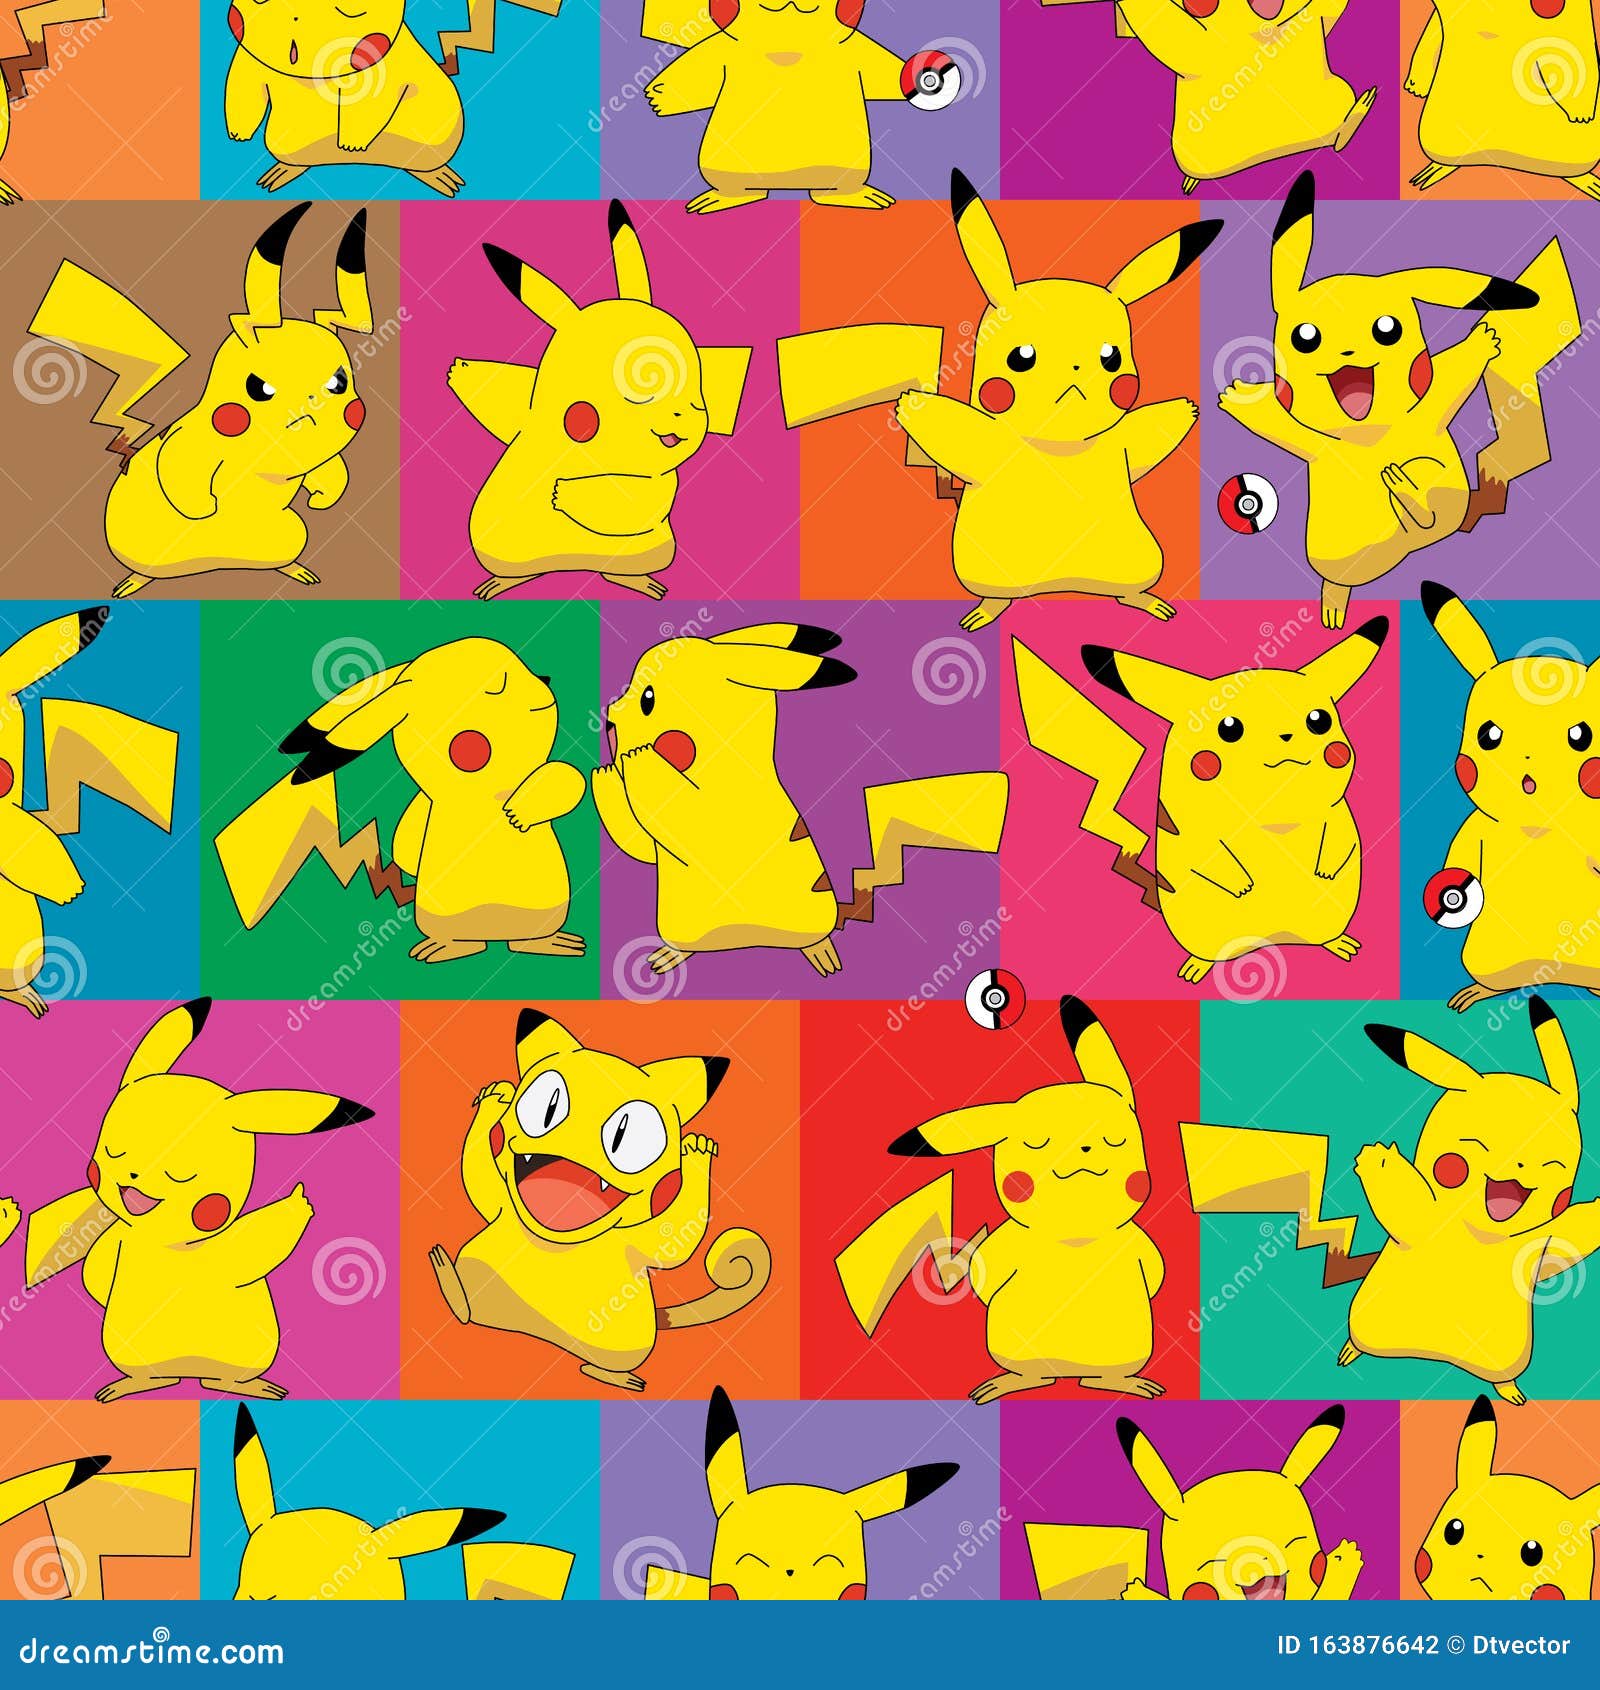 coisa fofas png - Pesquisa Google  Pikachu adorable, Imagenes de pikachu  tierno, Pikachu